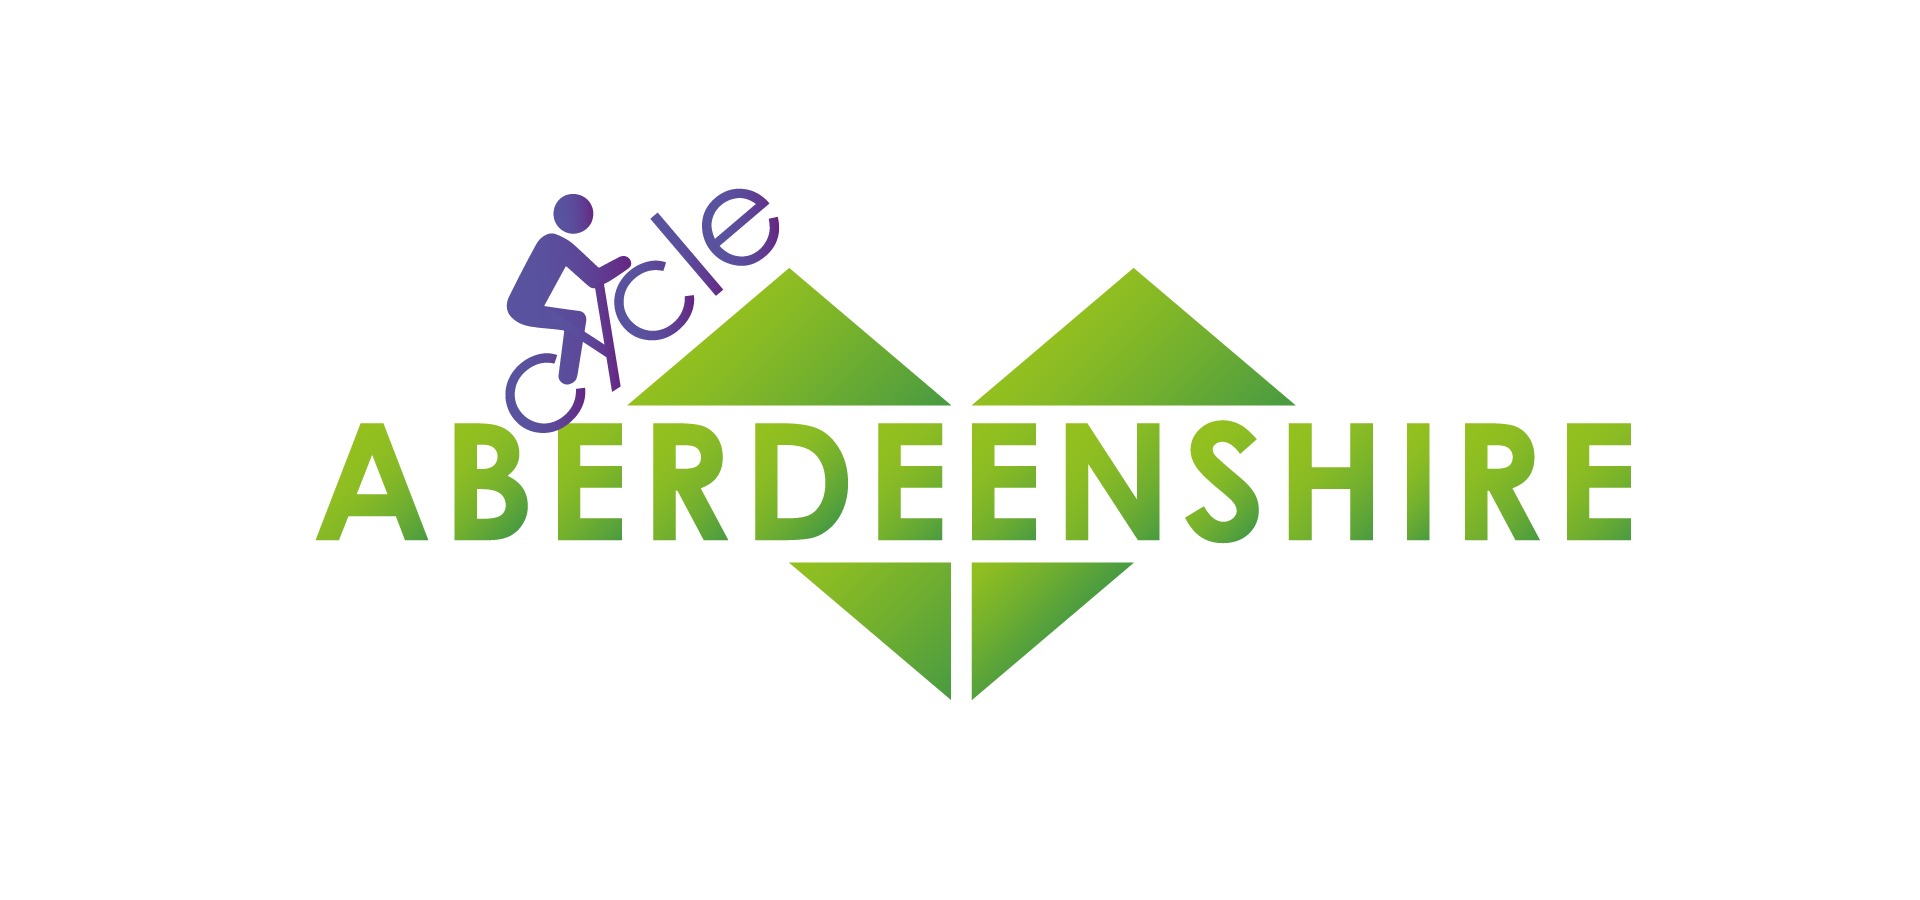 Cycle Aberdeenshire logo